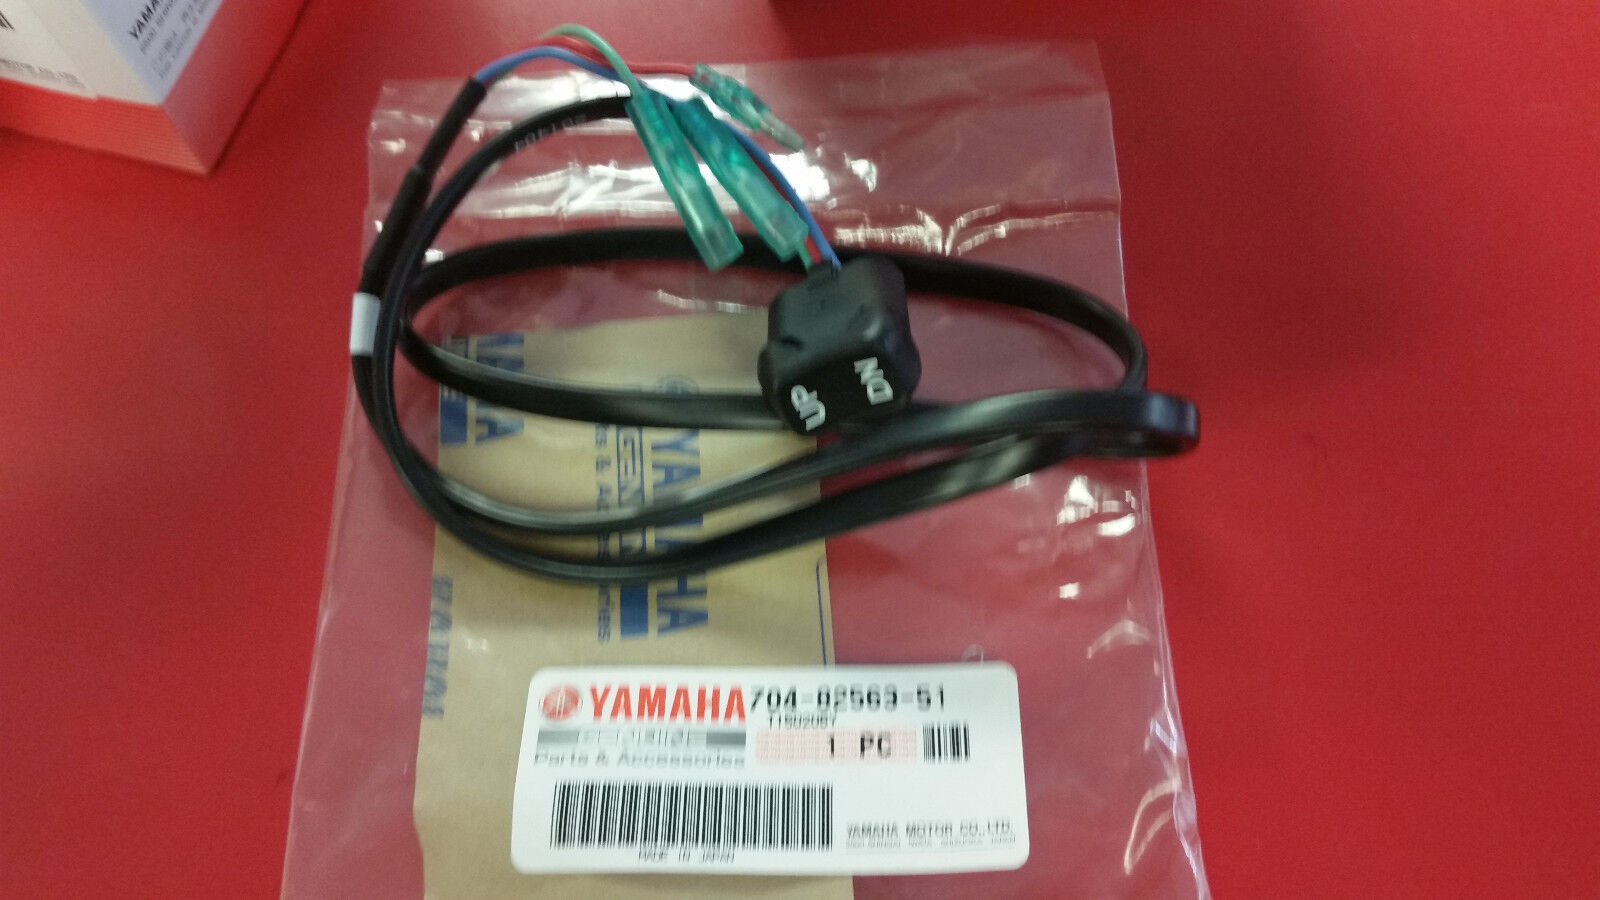 Yamaha 704-82563-51-00 Trim & Tilt Switch Assy. 704 Twin Engine 